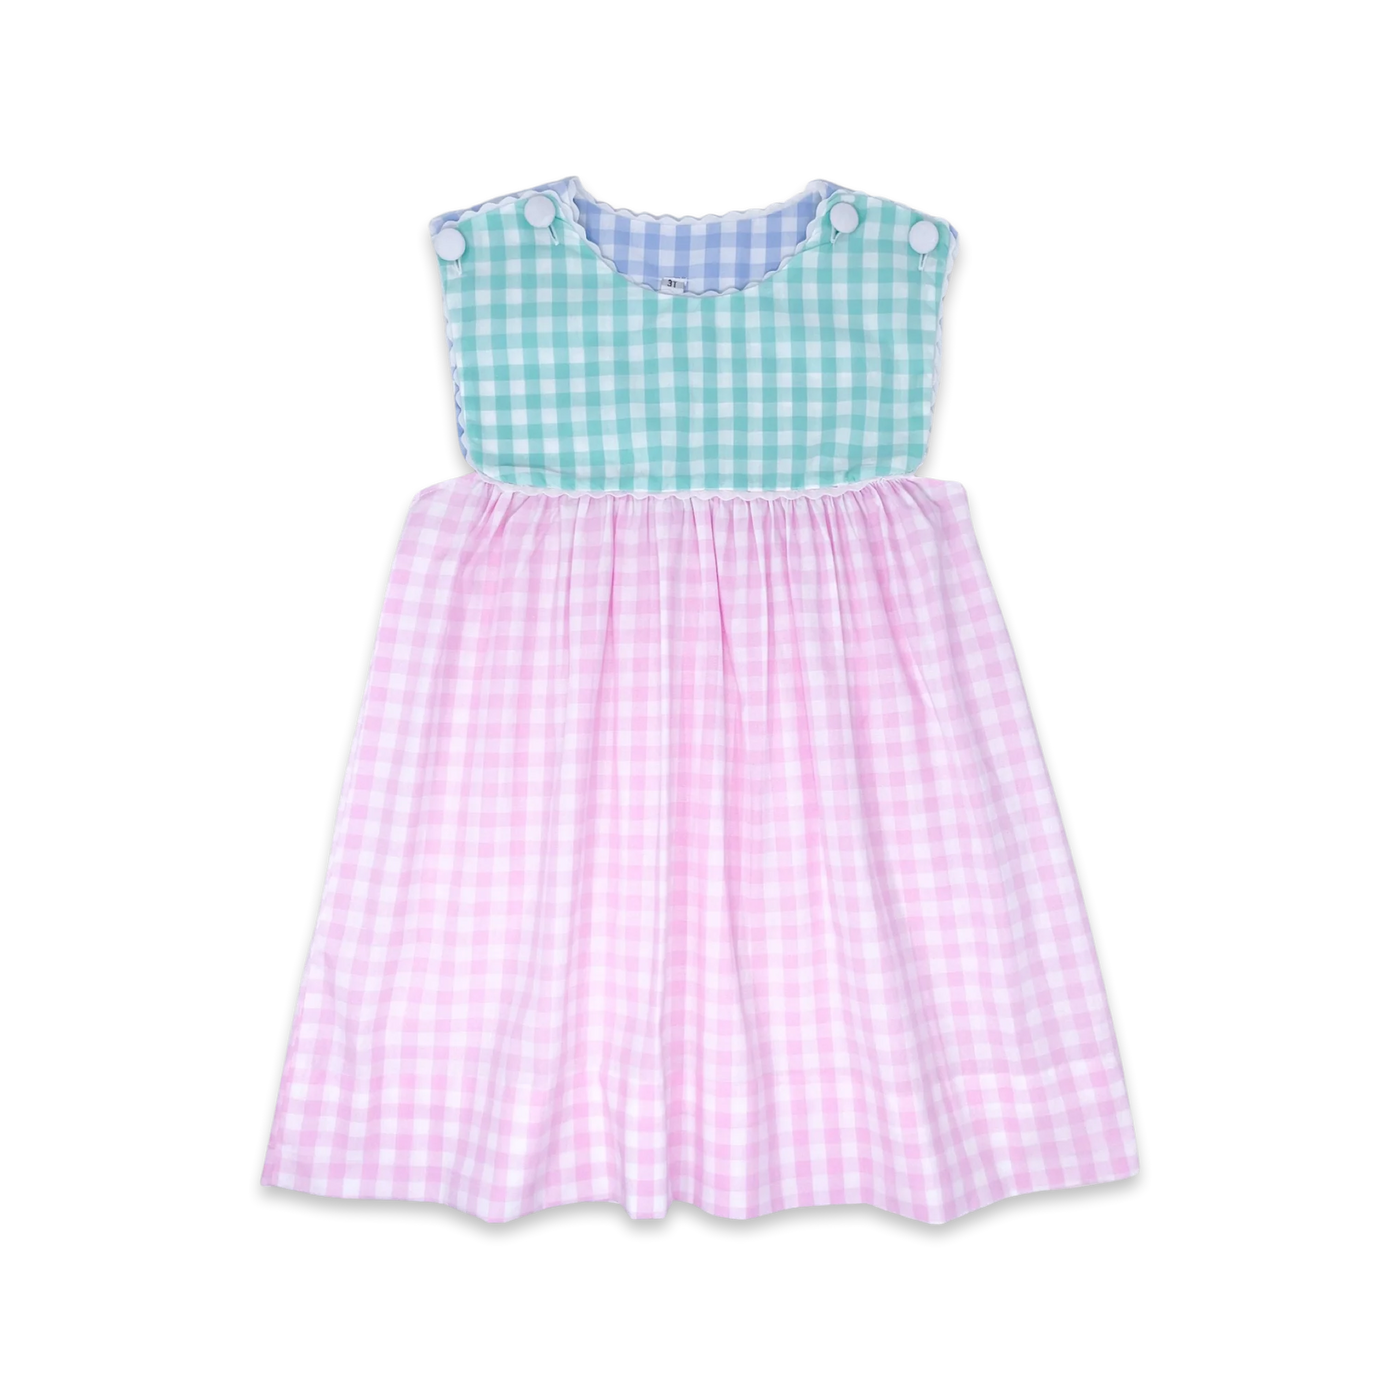 Charming Dress - Pink, Mint, Blue Check